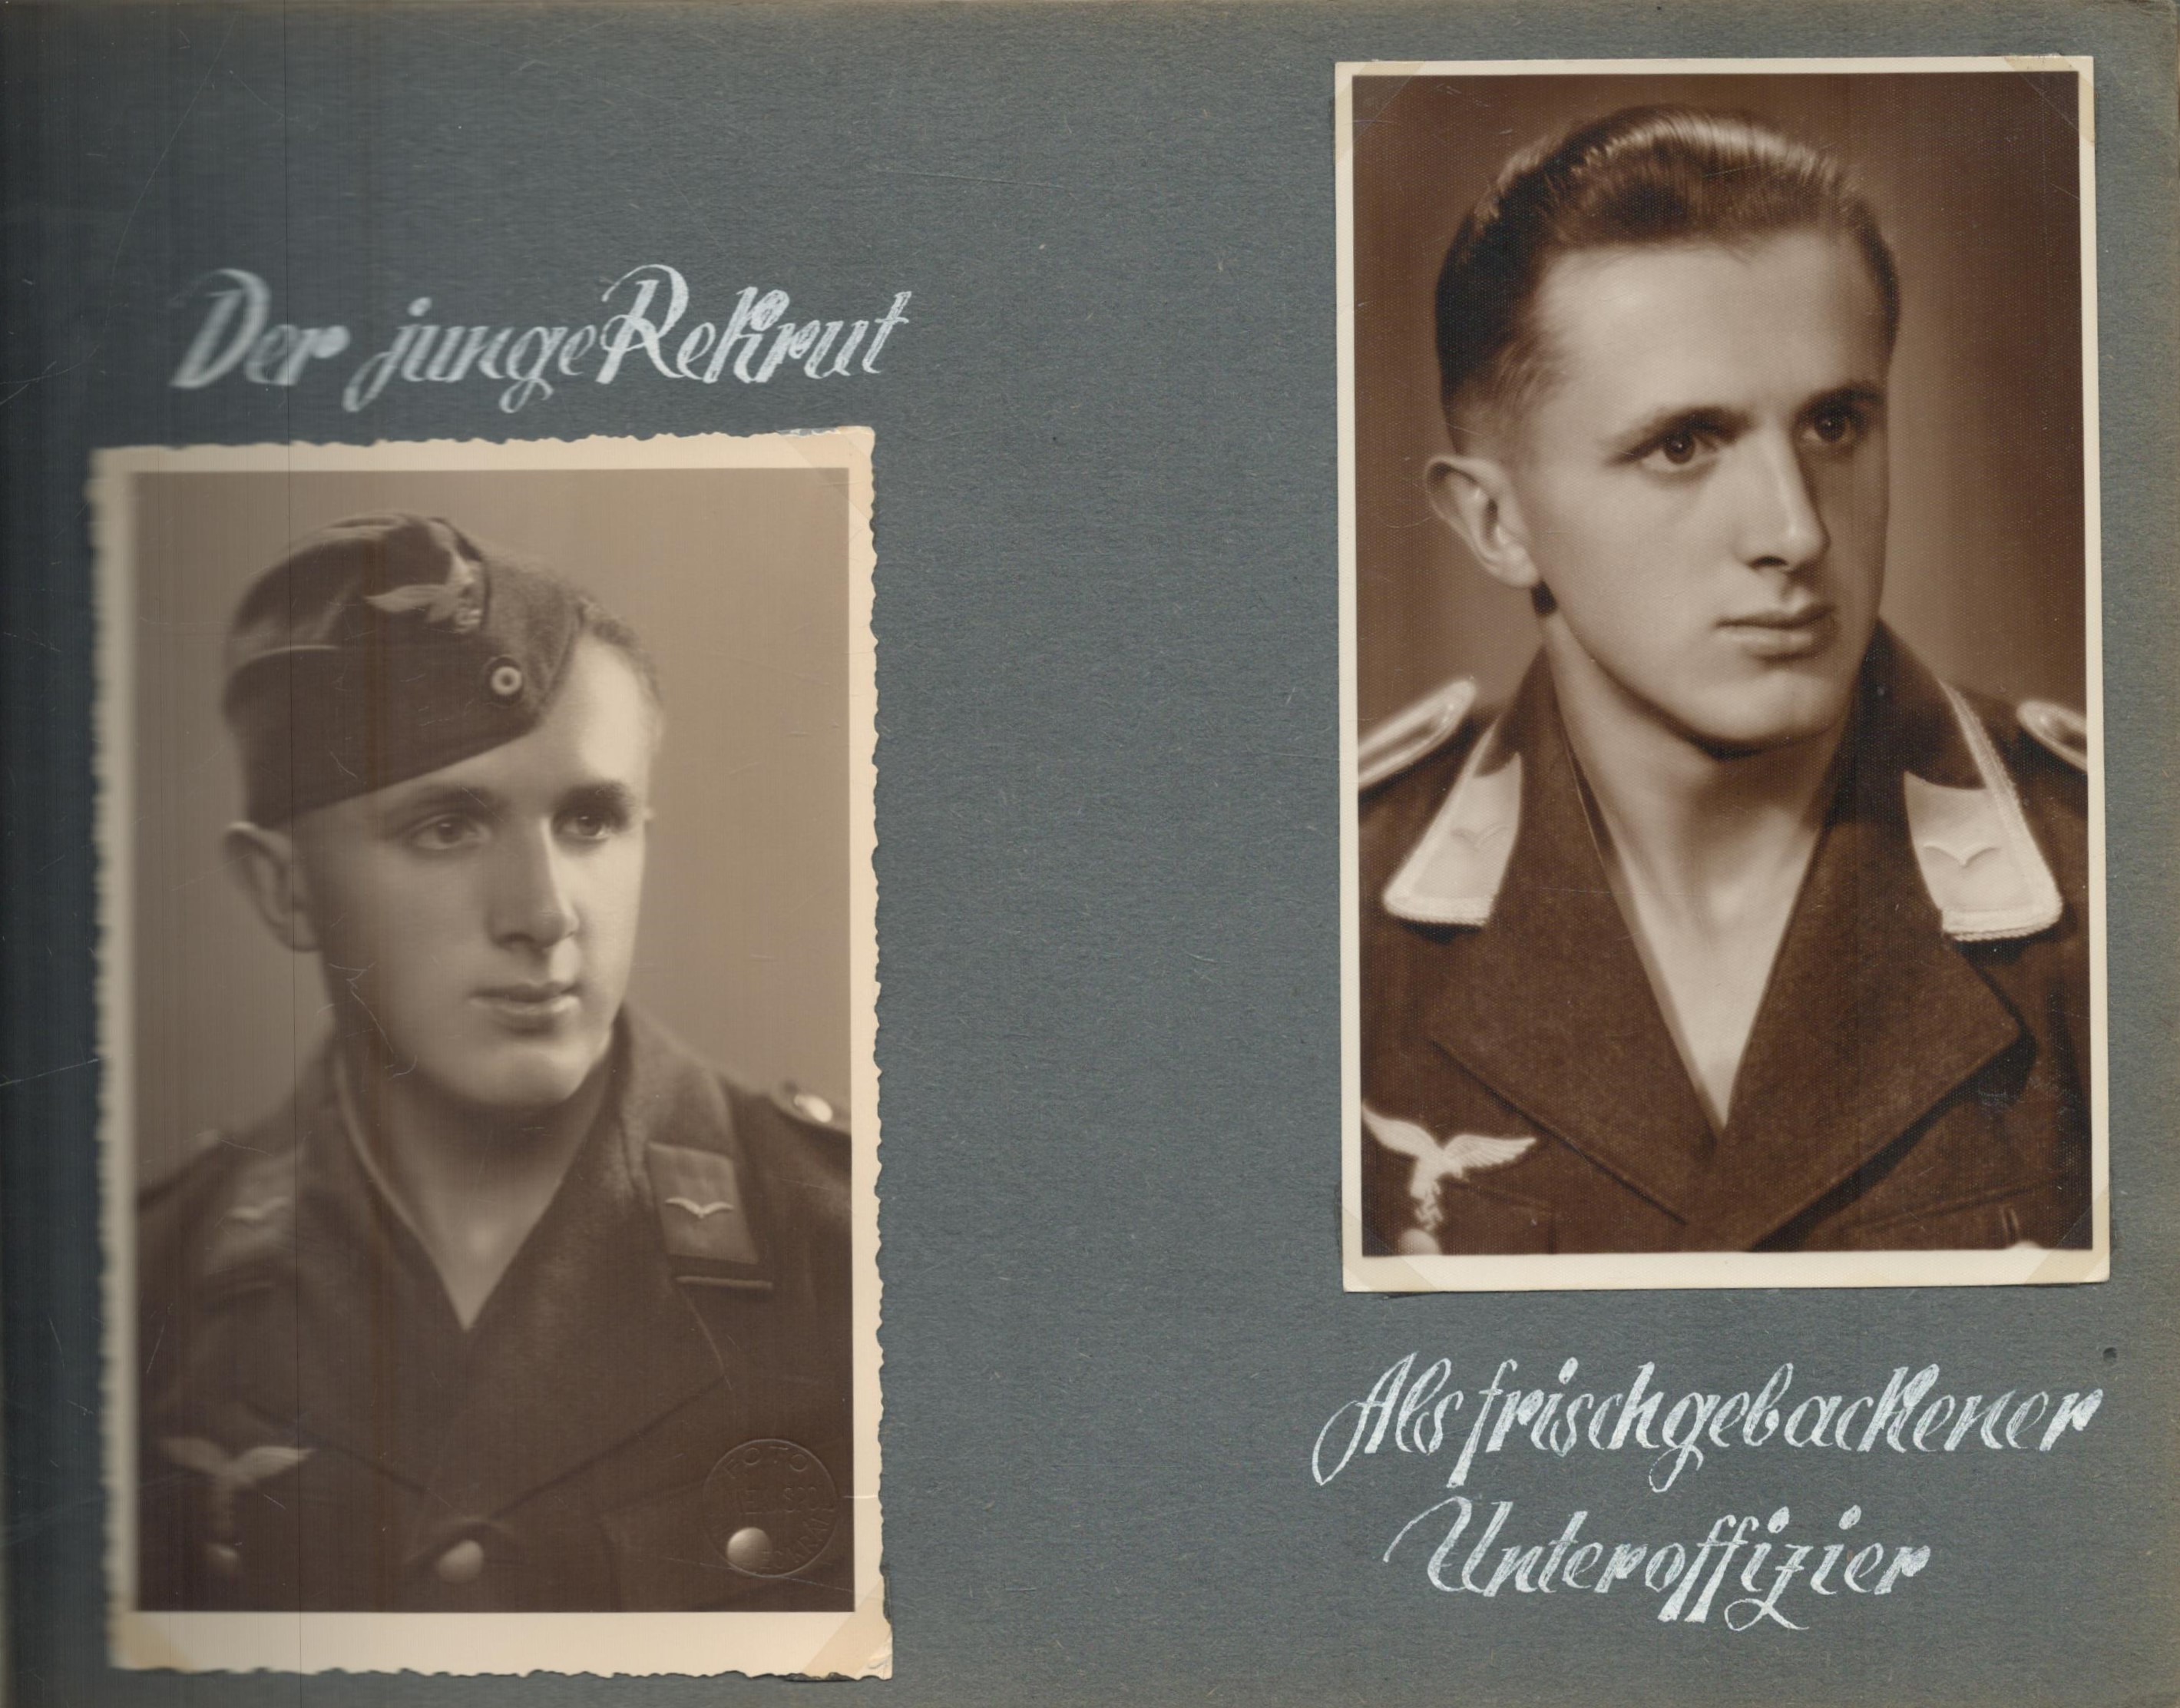 Luftwaffe Stuka Operator photo album of the career and war memories of Erich Heine rear gunner and - Image 4 of 12